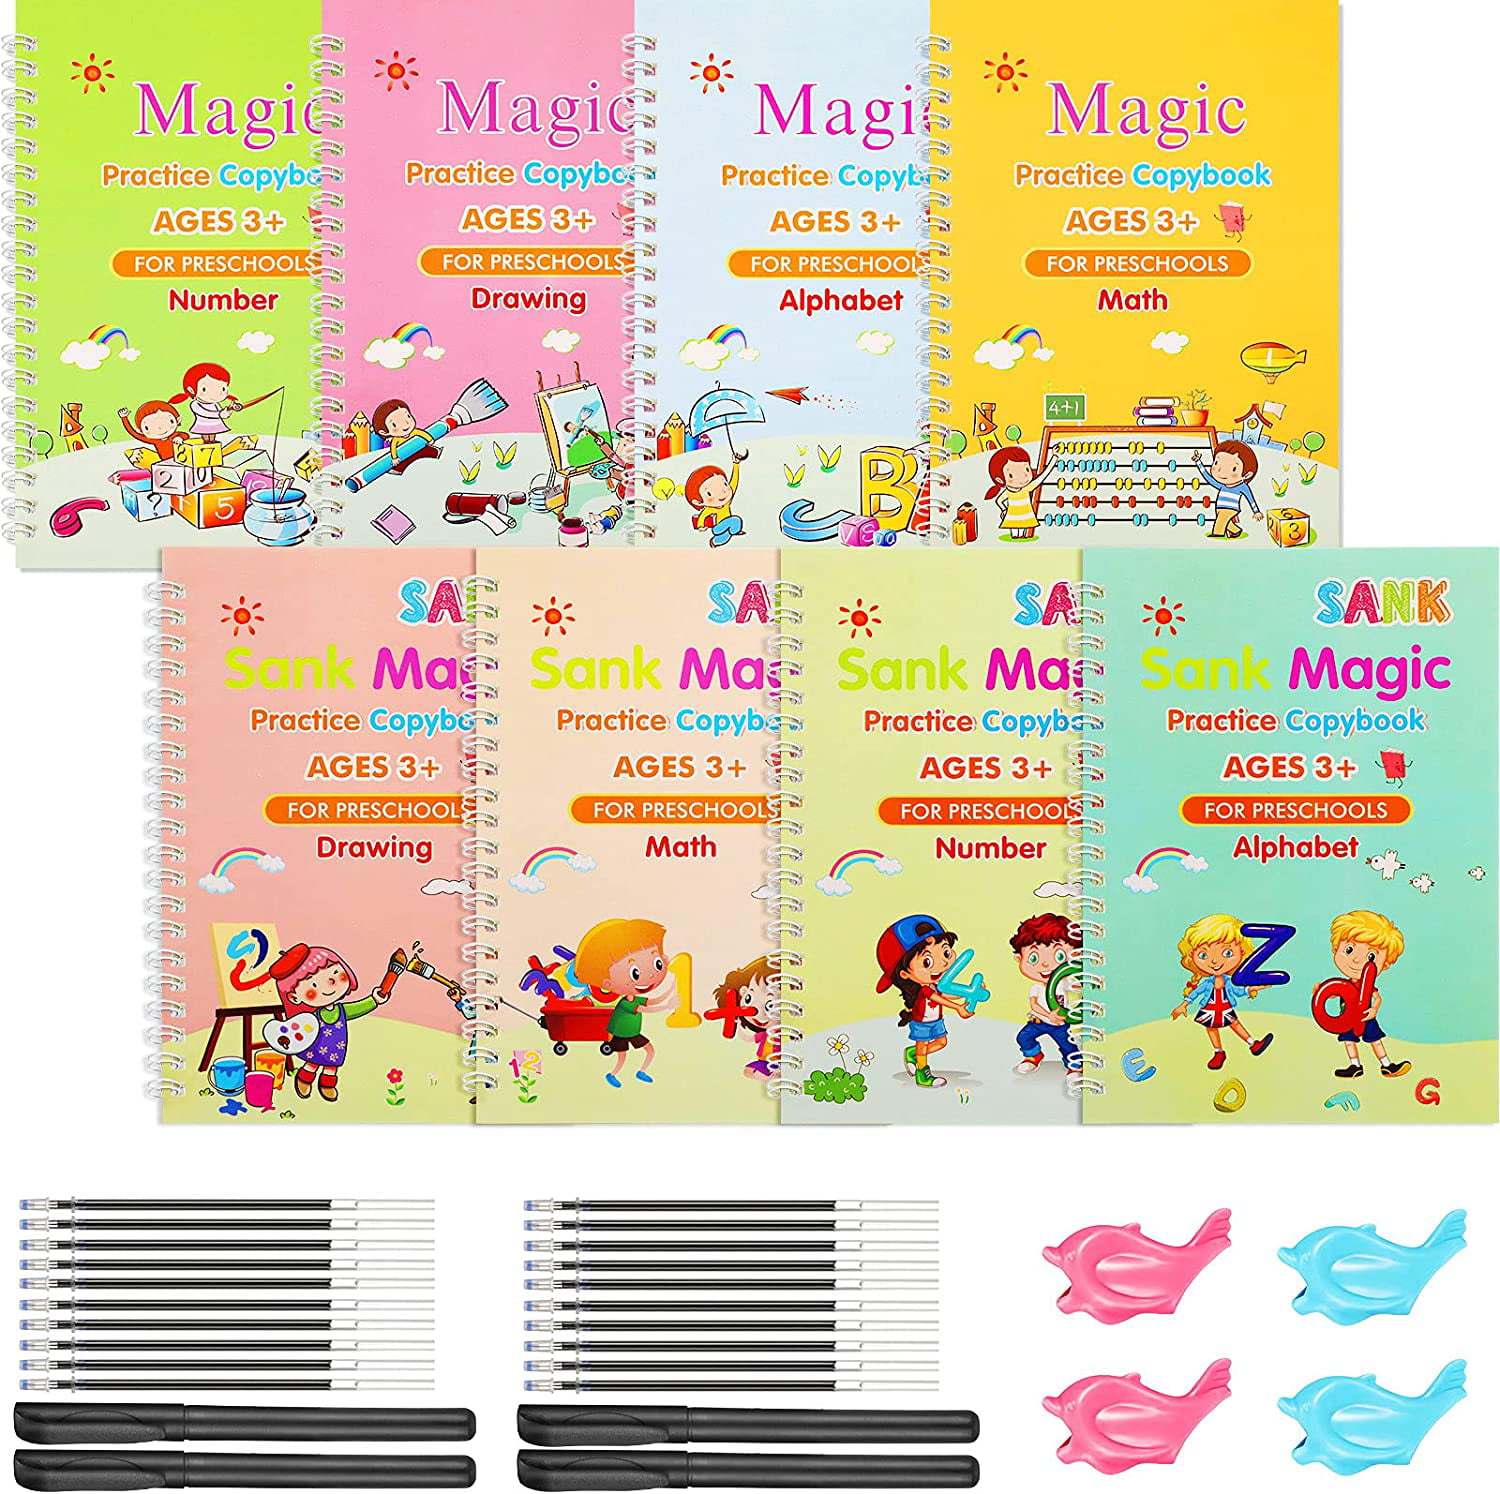 4 Pack English Magic Practice Copybook,Magic Calligraphy Reusable Handwriting Workbook pens Set for Preschool Kindergarten Kids Child Alphabet Drawing Number Math Learning 